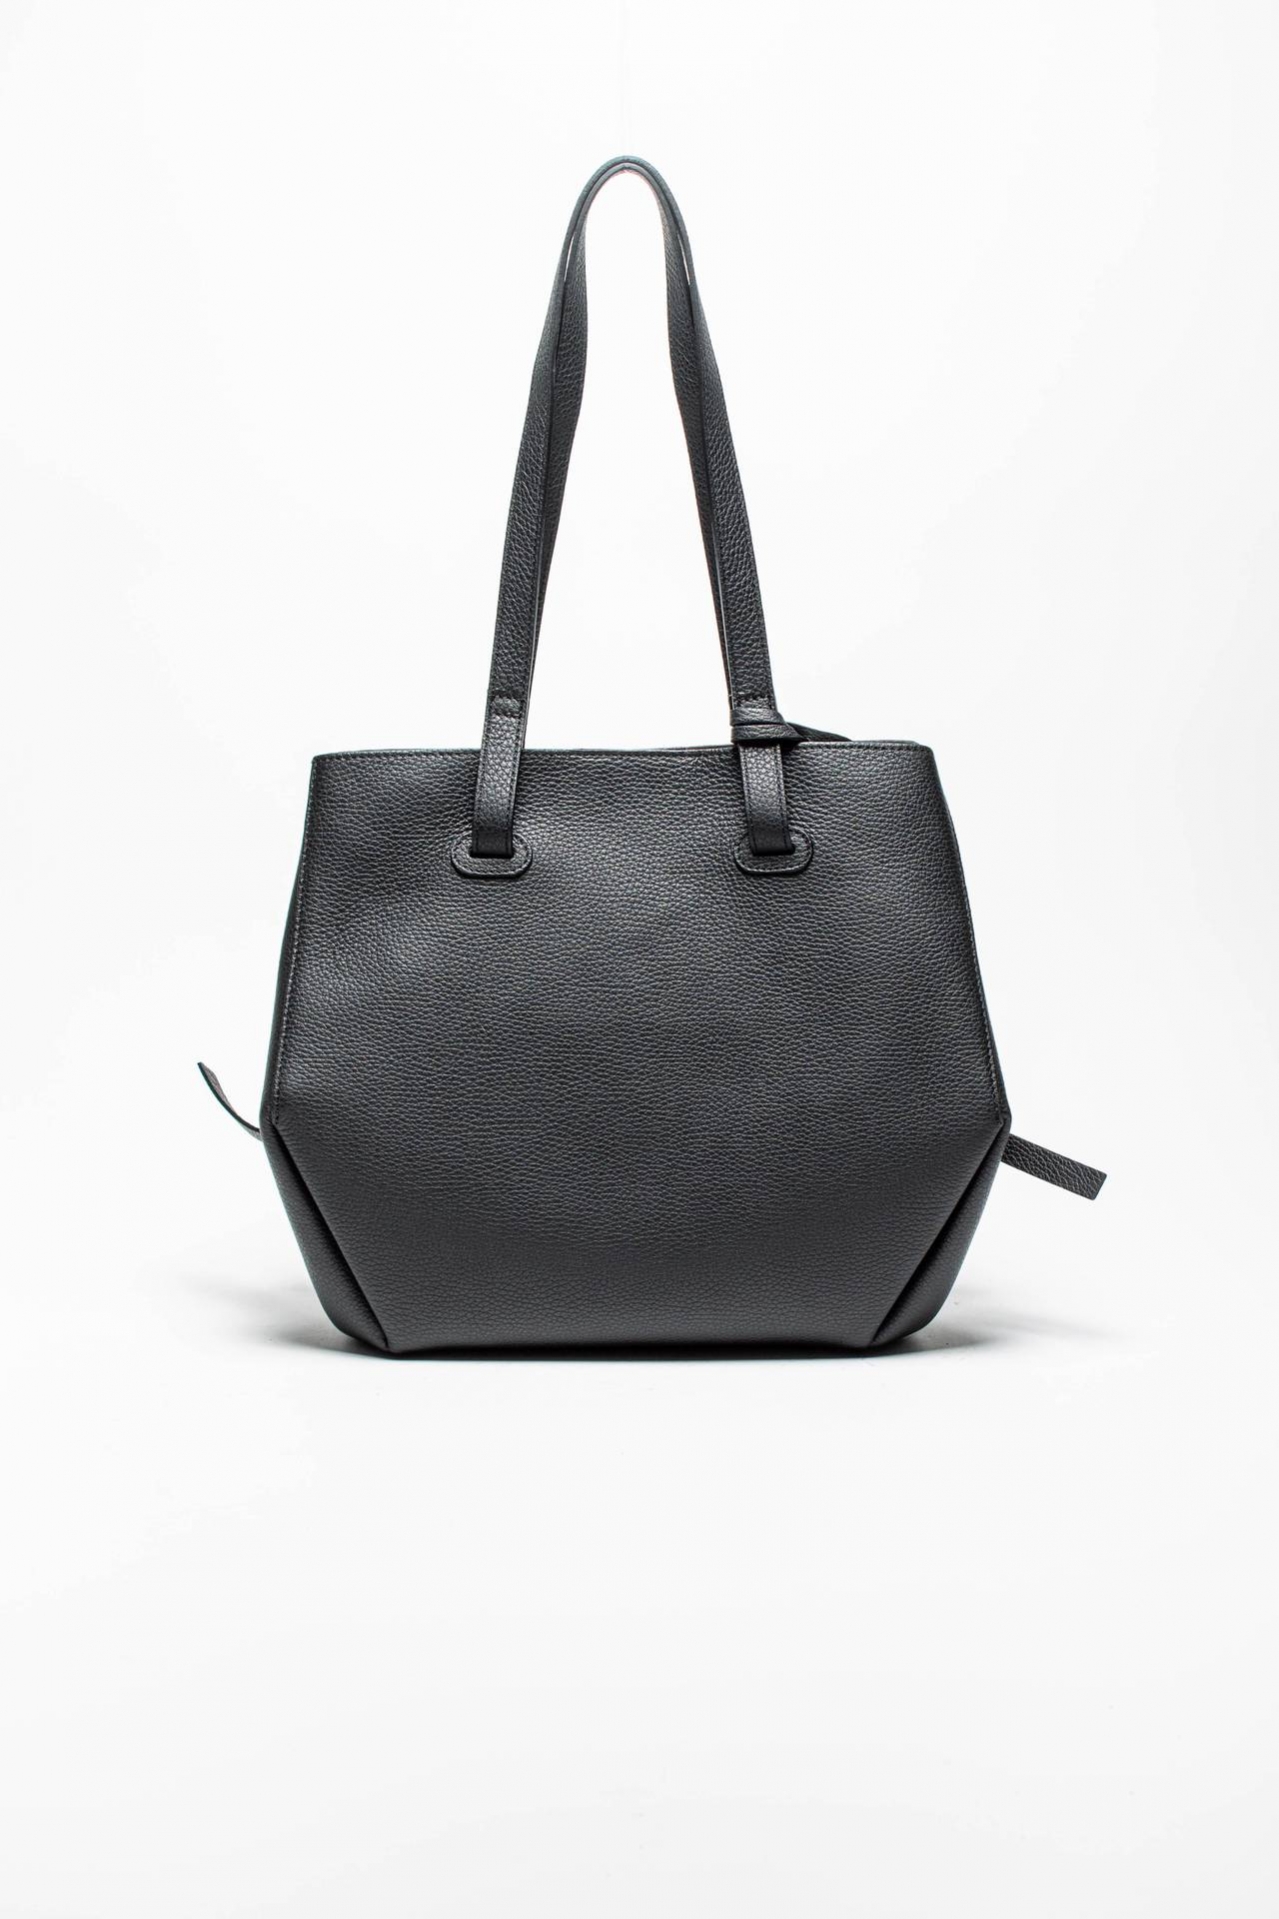 Black leather VICTORIA bag